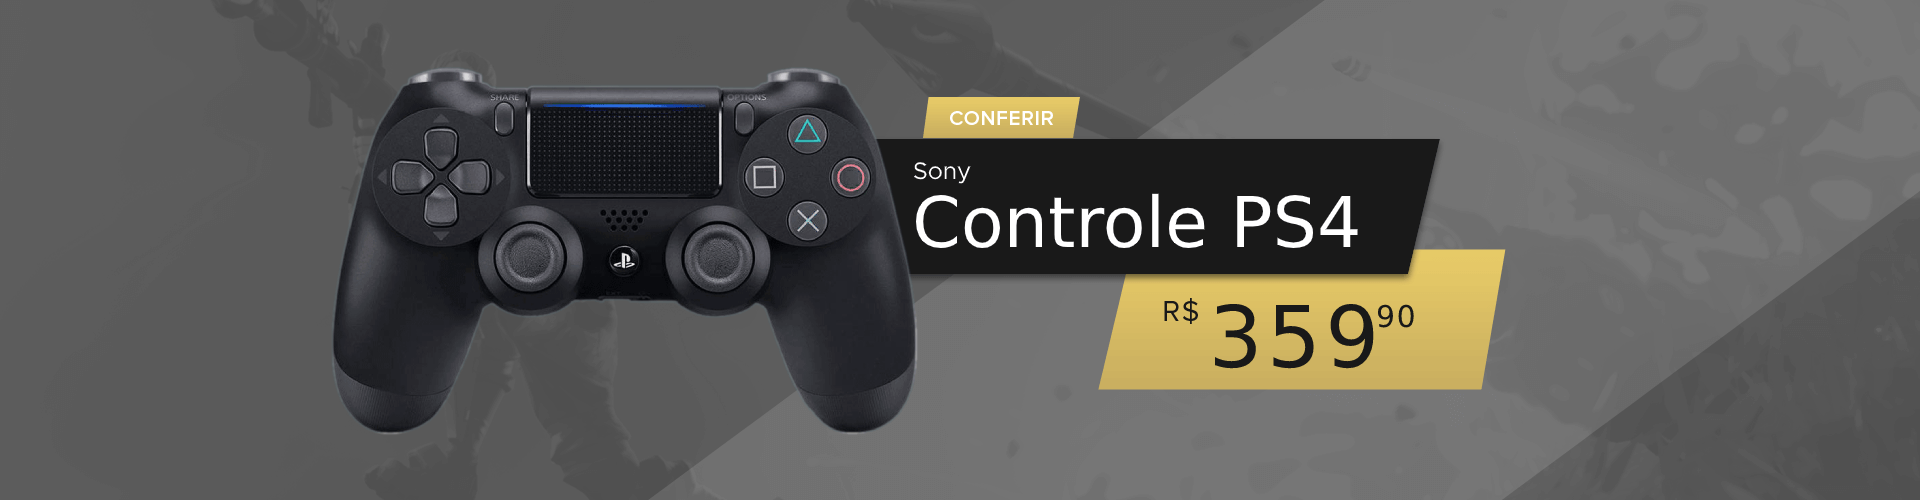 controle PS4